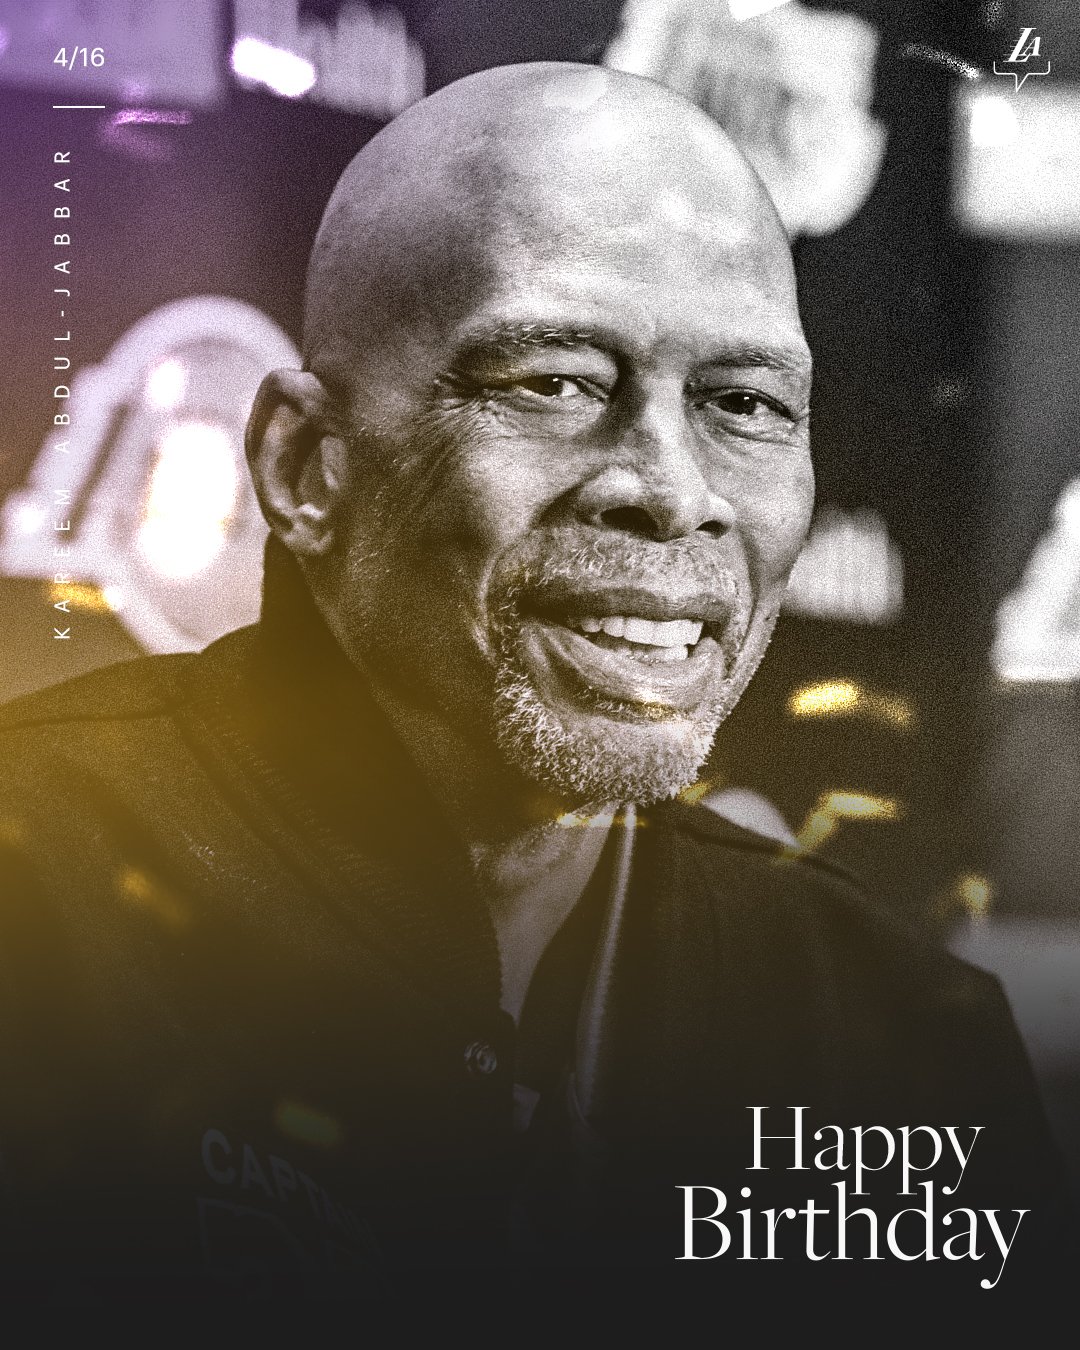  Happy Birthday to Power Memorial\s New York City Basketball Hall of Famer - the great Kareem Abdul Jabbar! 